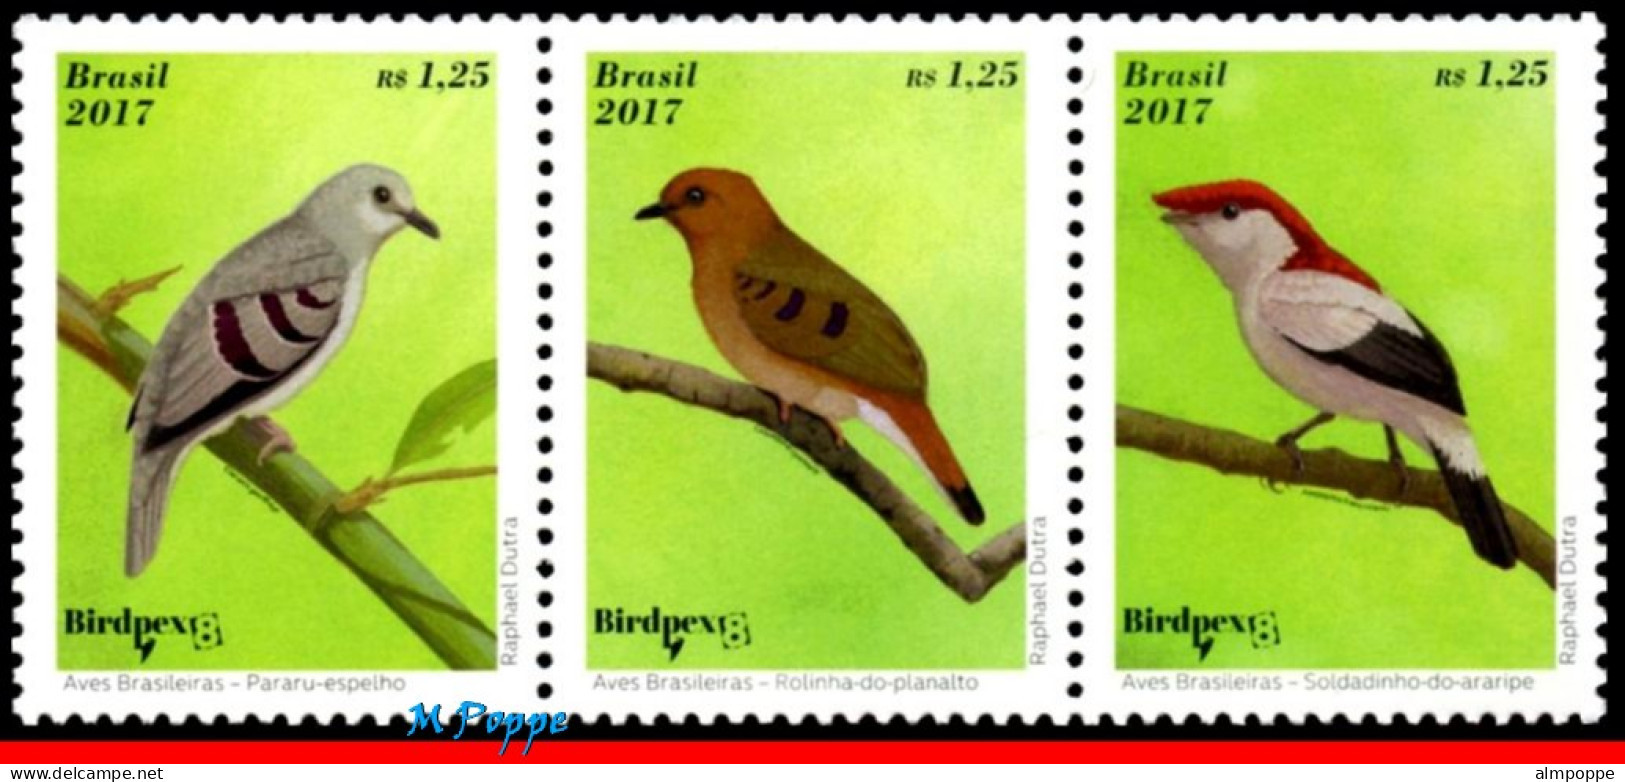 Ref. BR-V2017-04-4 BRAZIL 2017 - BRAZILIAN BIRDS,BIRDPEX 8, ENDANGERED, SHEET MNH, BIRDS 15V - Blocks & Kleinbögen